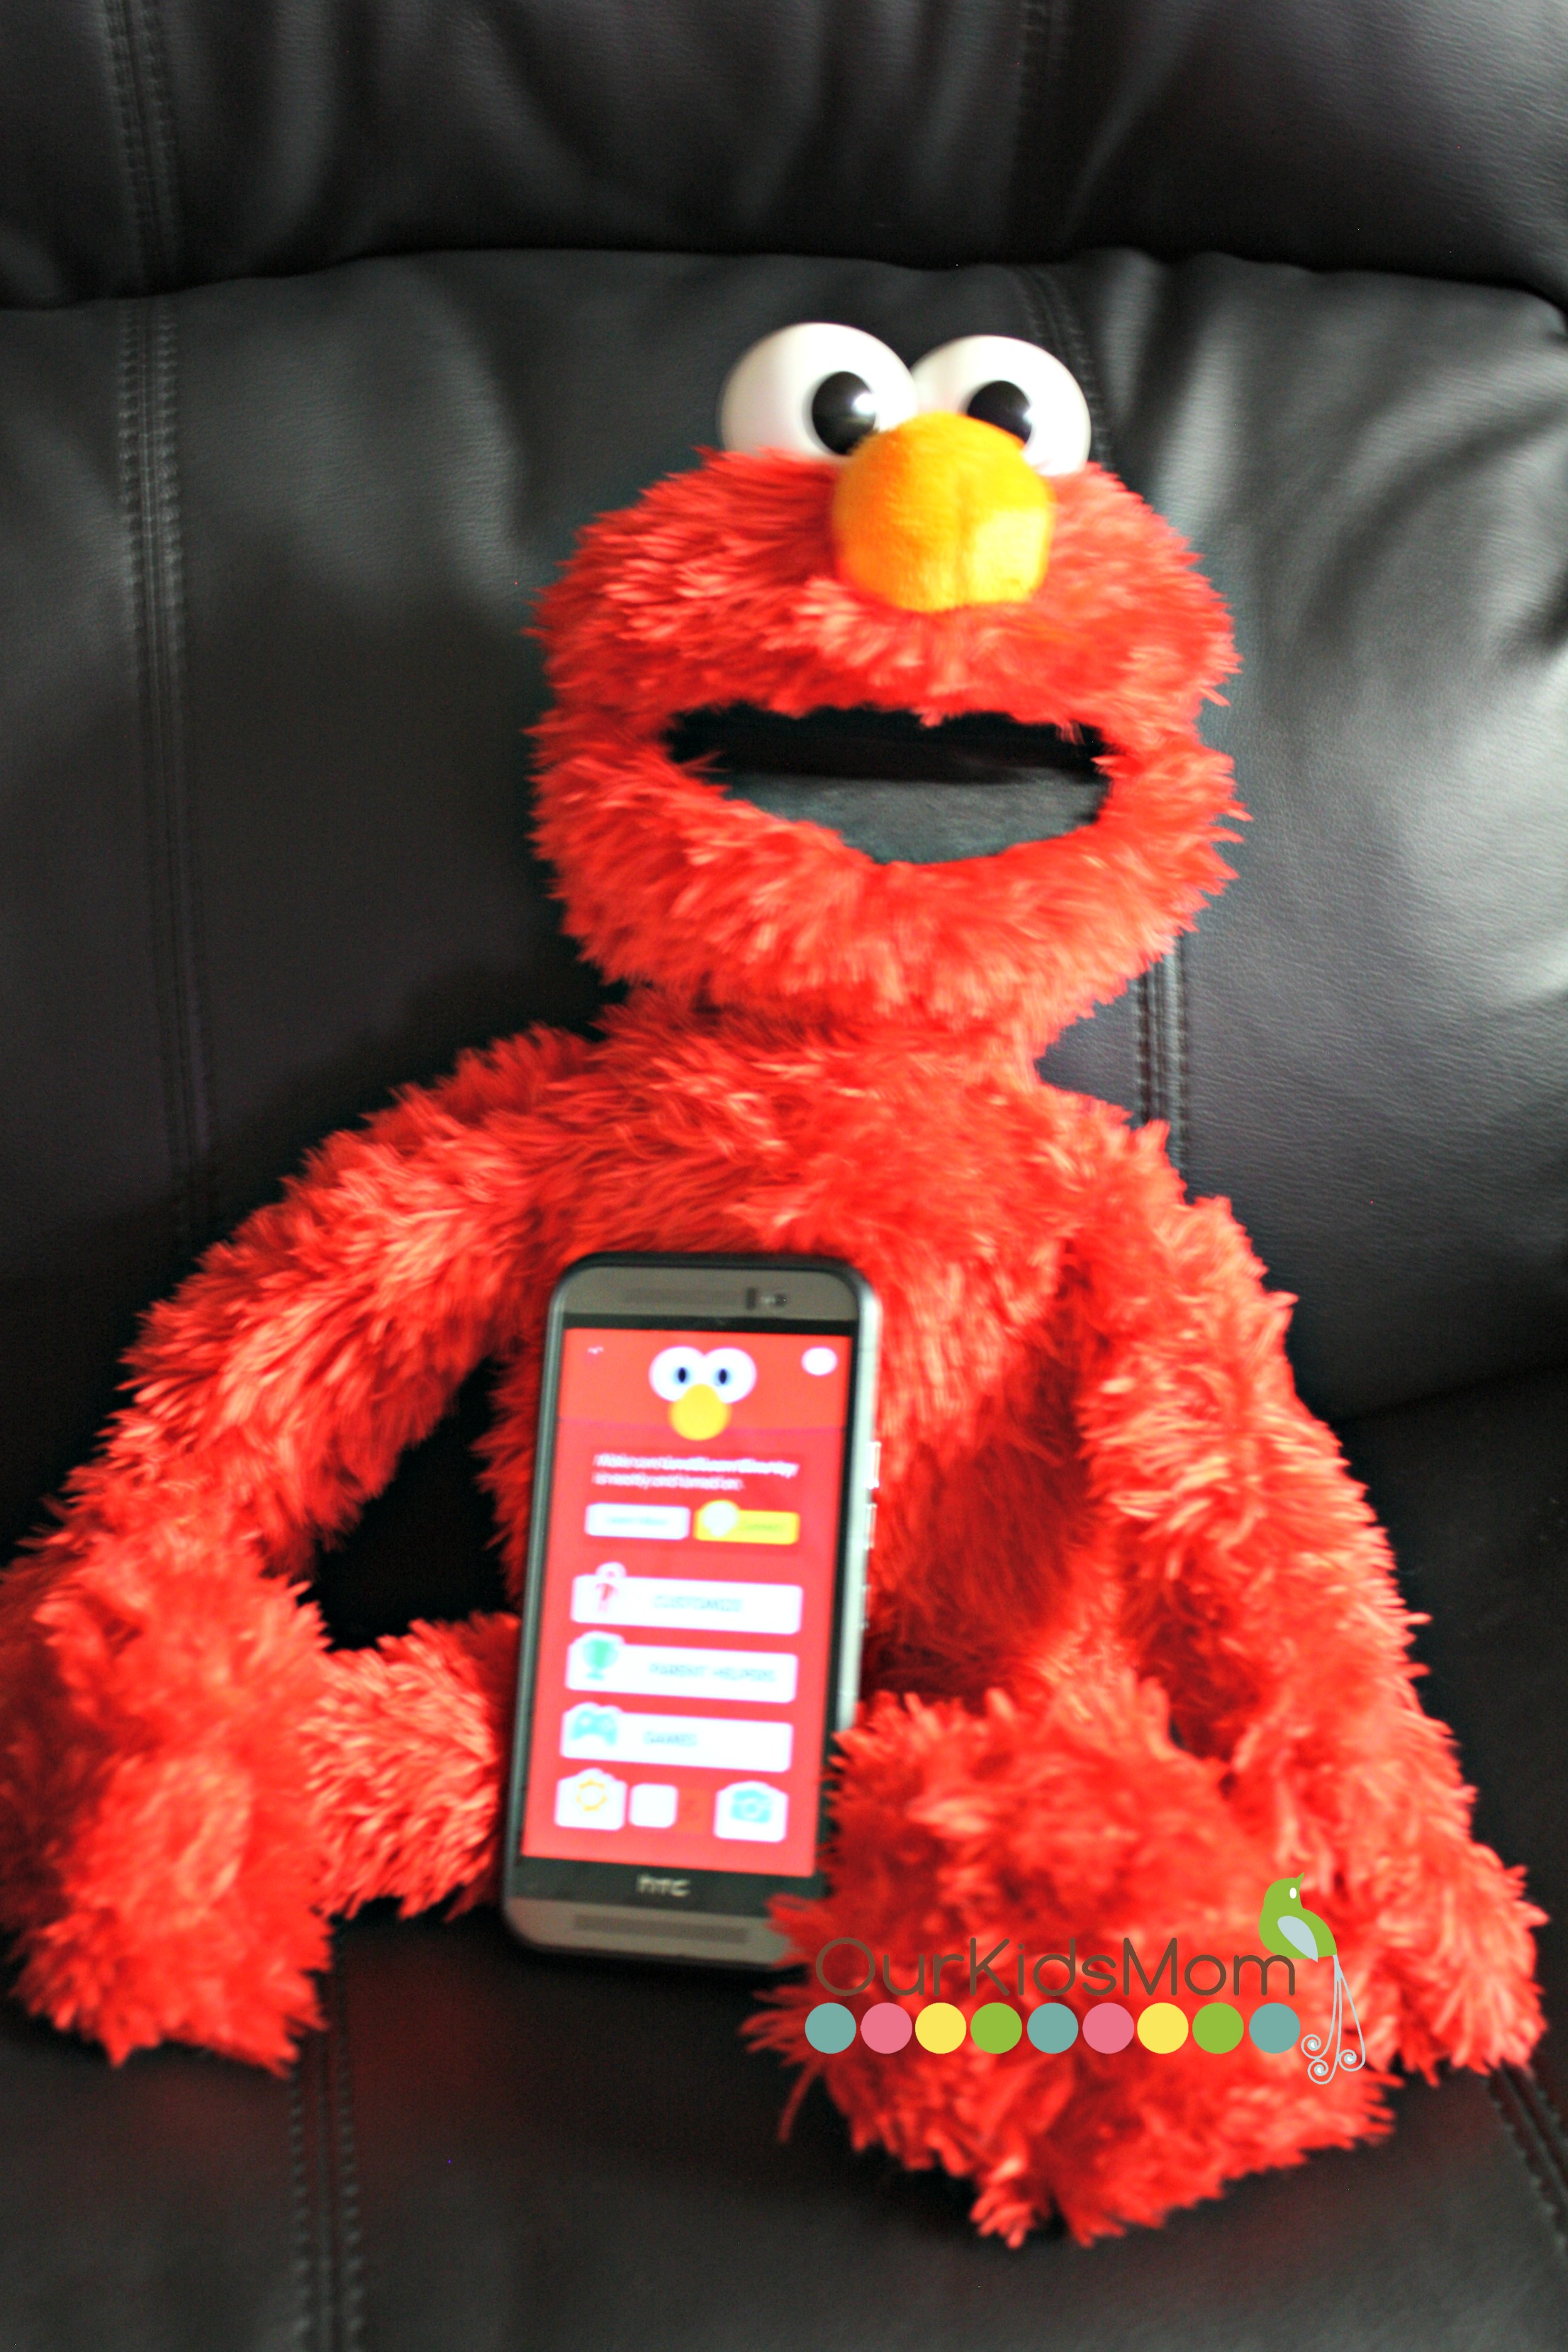 Elmo with the App